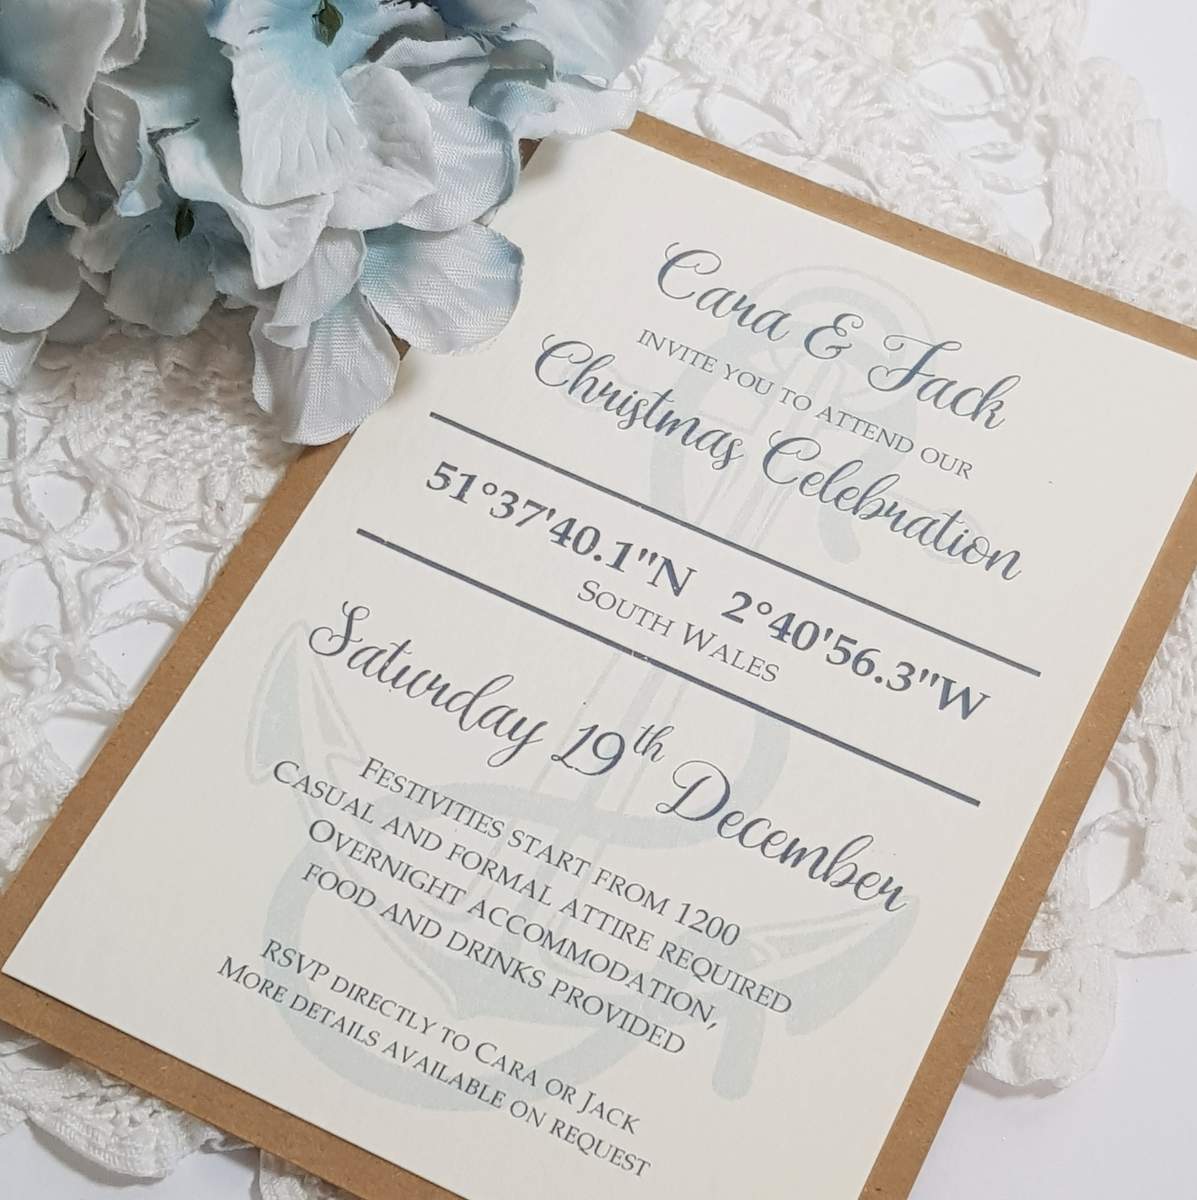 Surprise wedding invitations & stationery for Cara & Jack’s intimate winter celebration